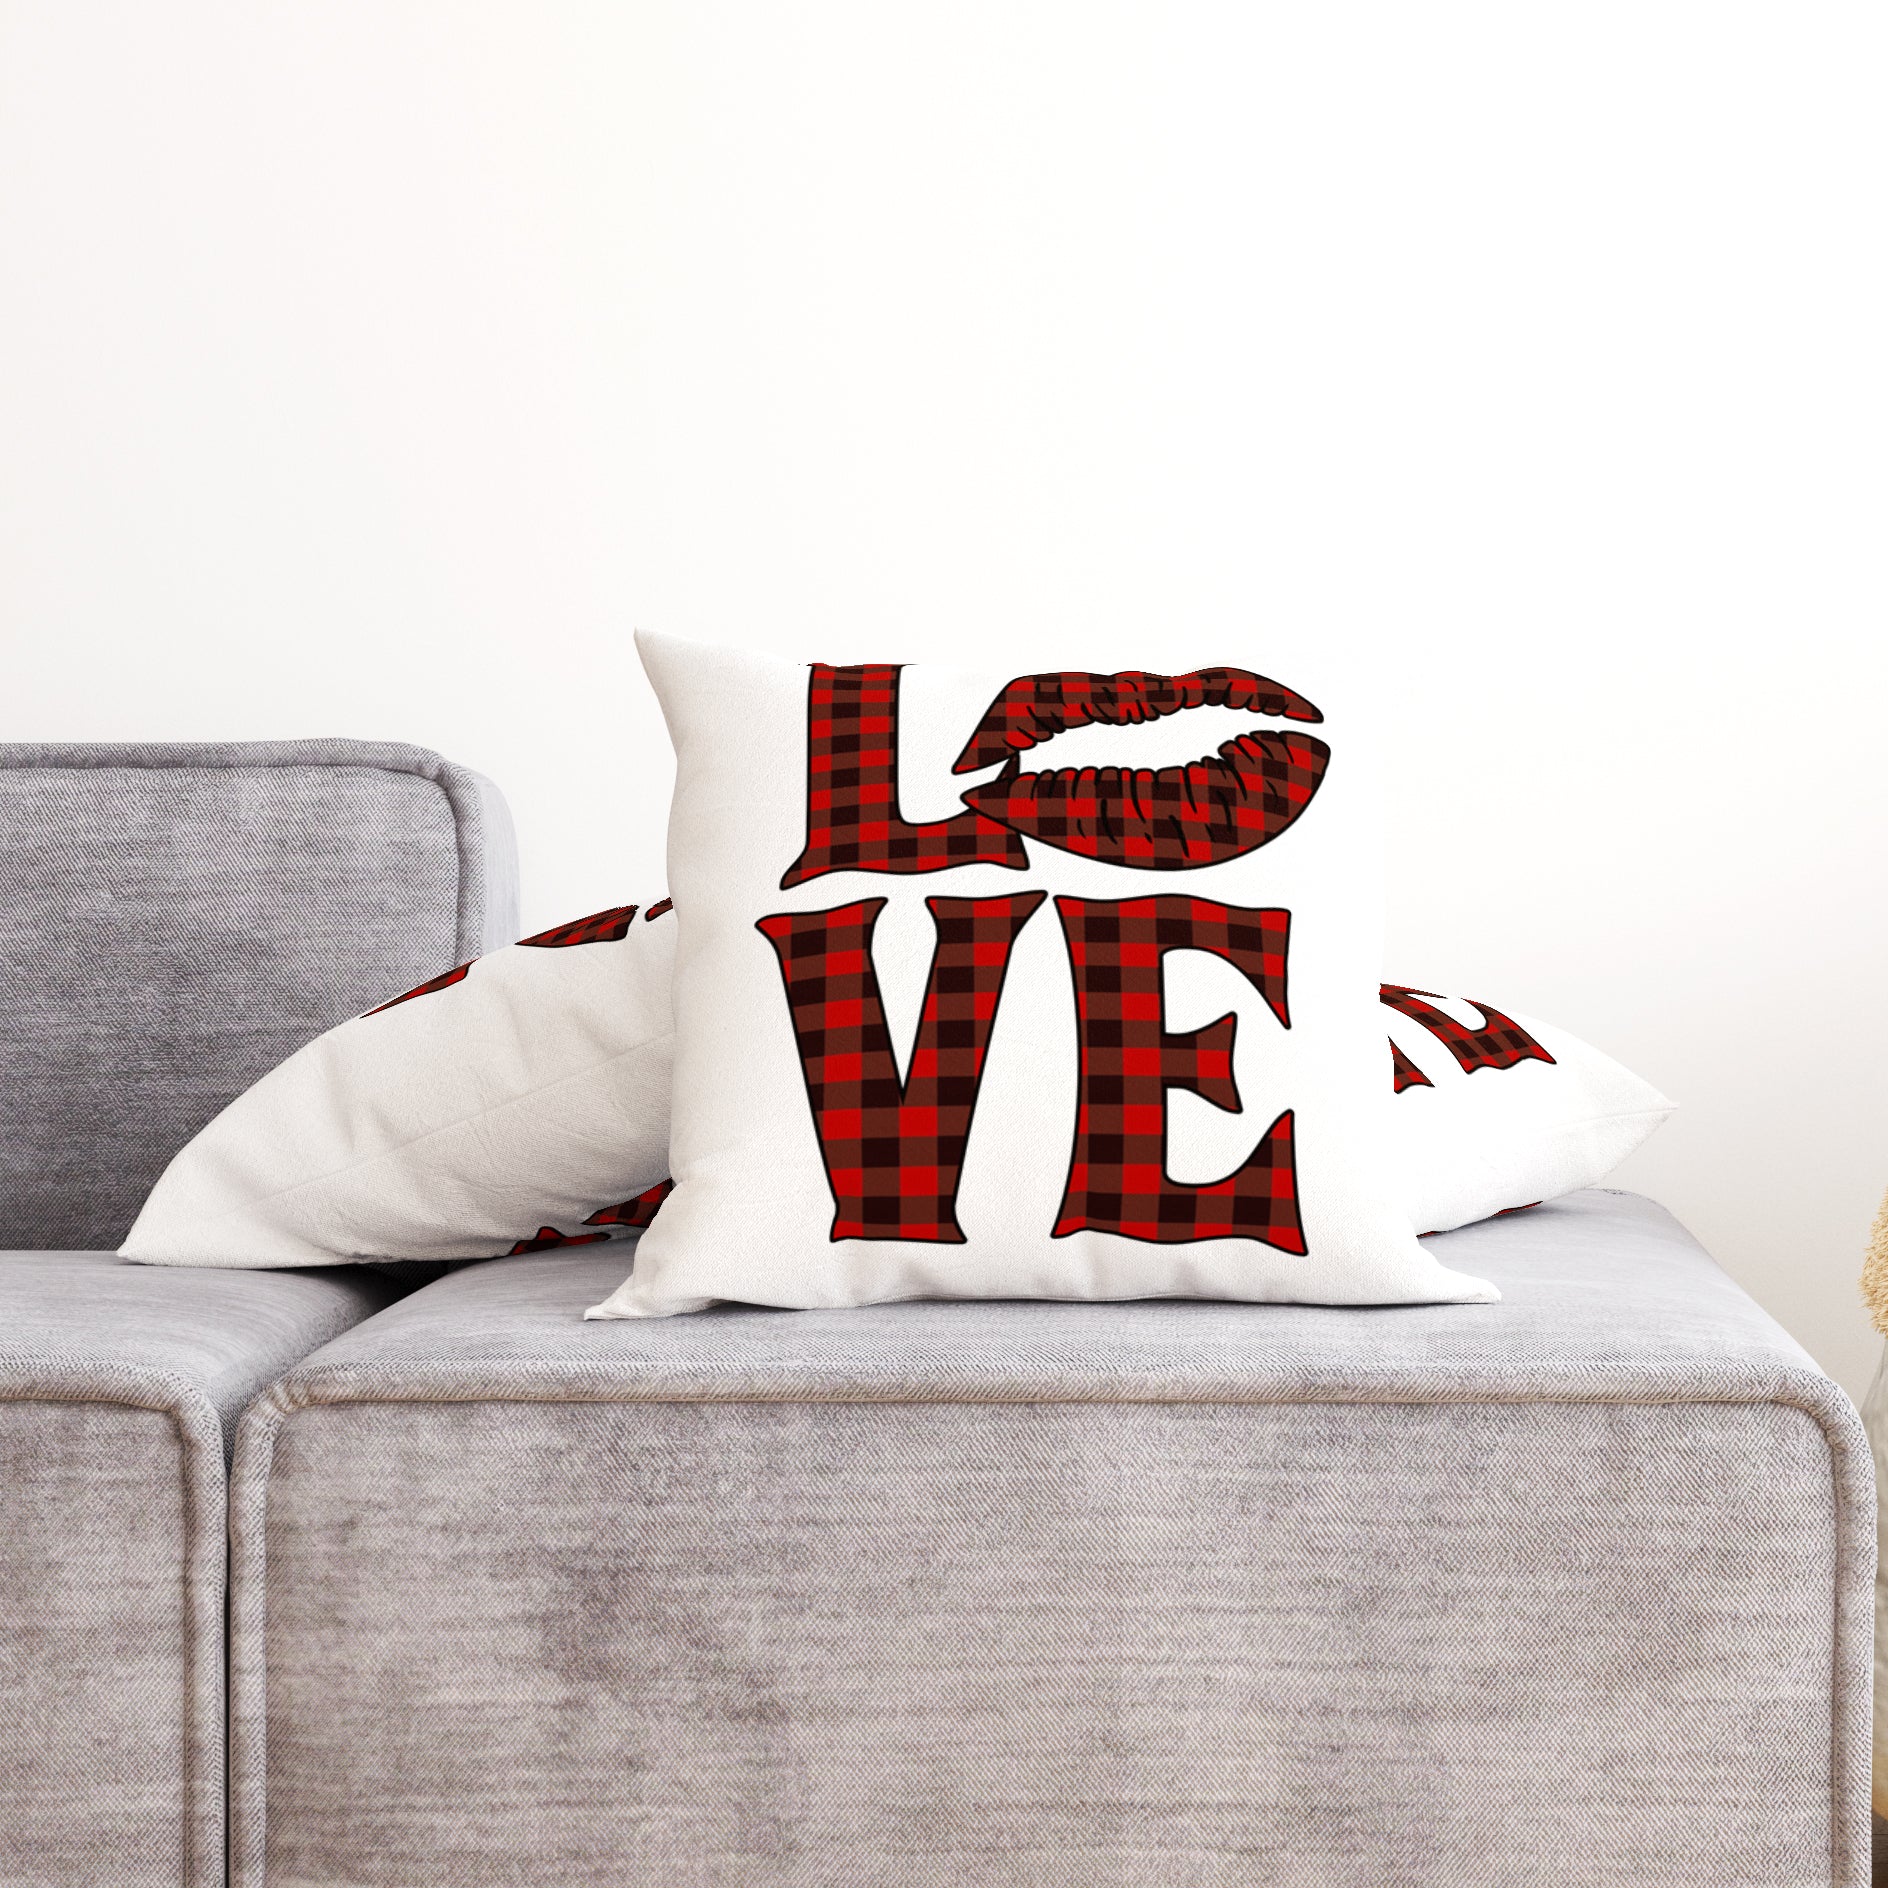 LOVE2.0 Cushion